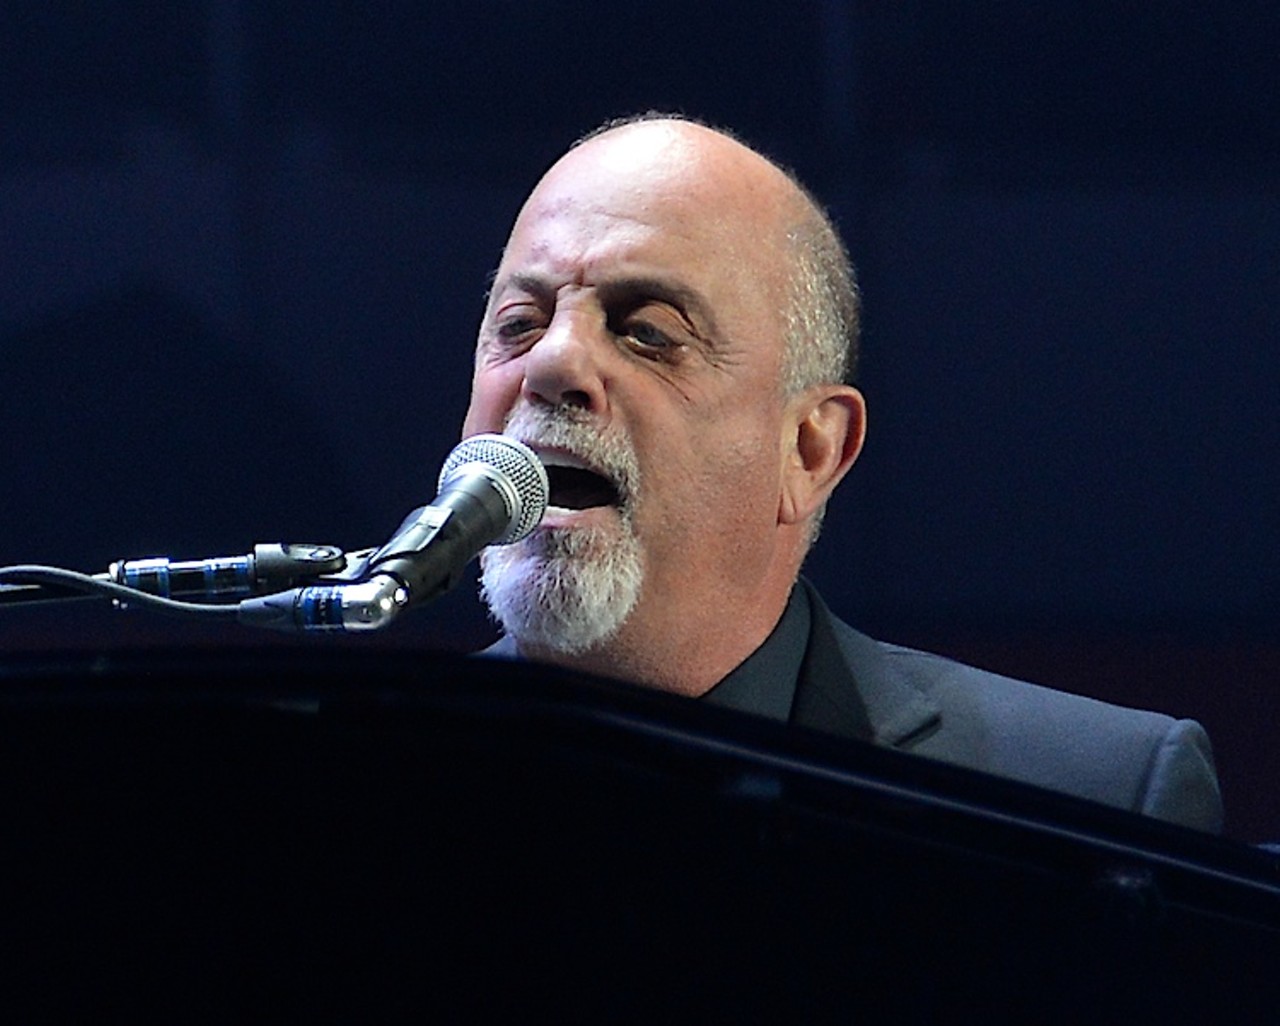 Billy Joel Performing at Quicken Loans Arena